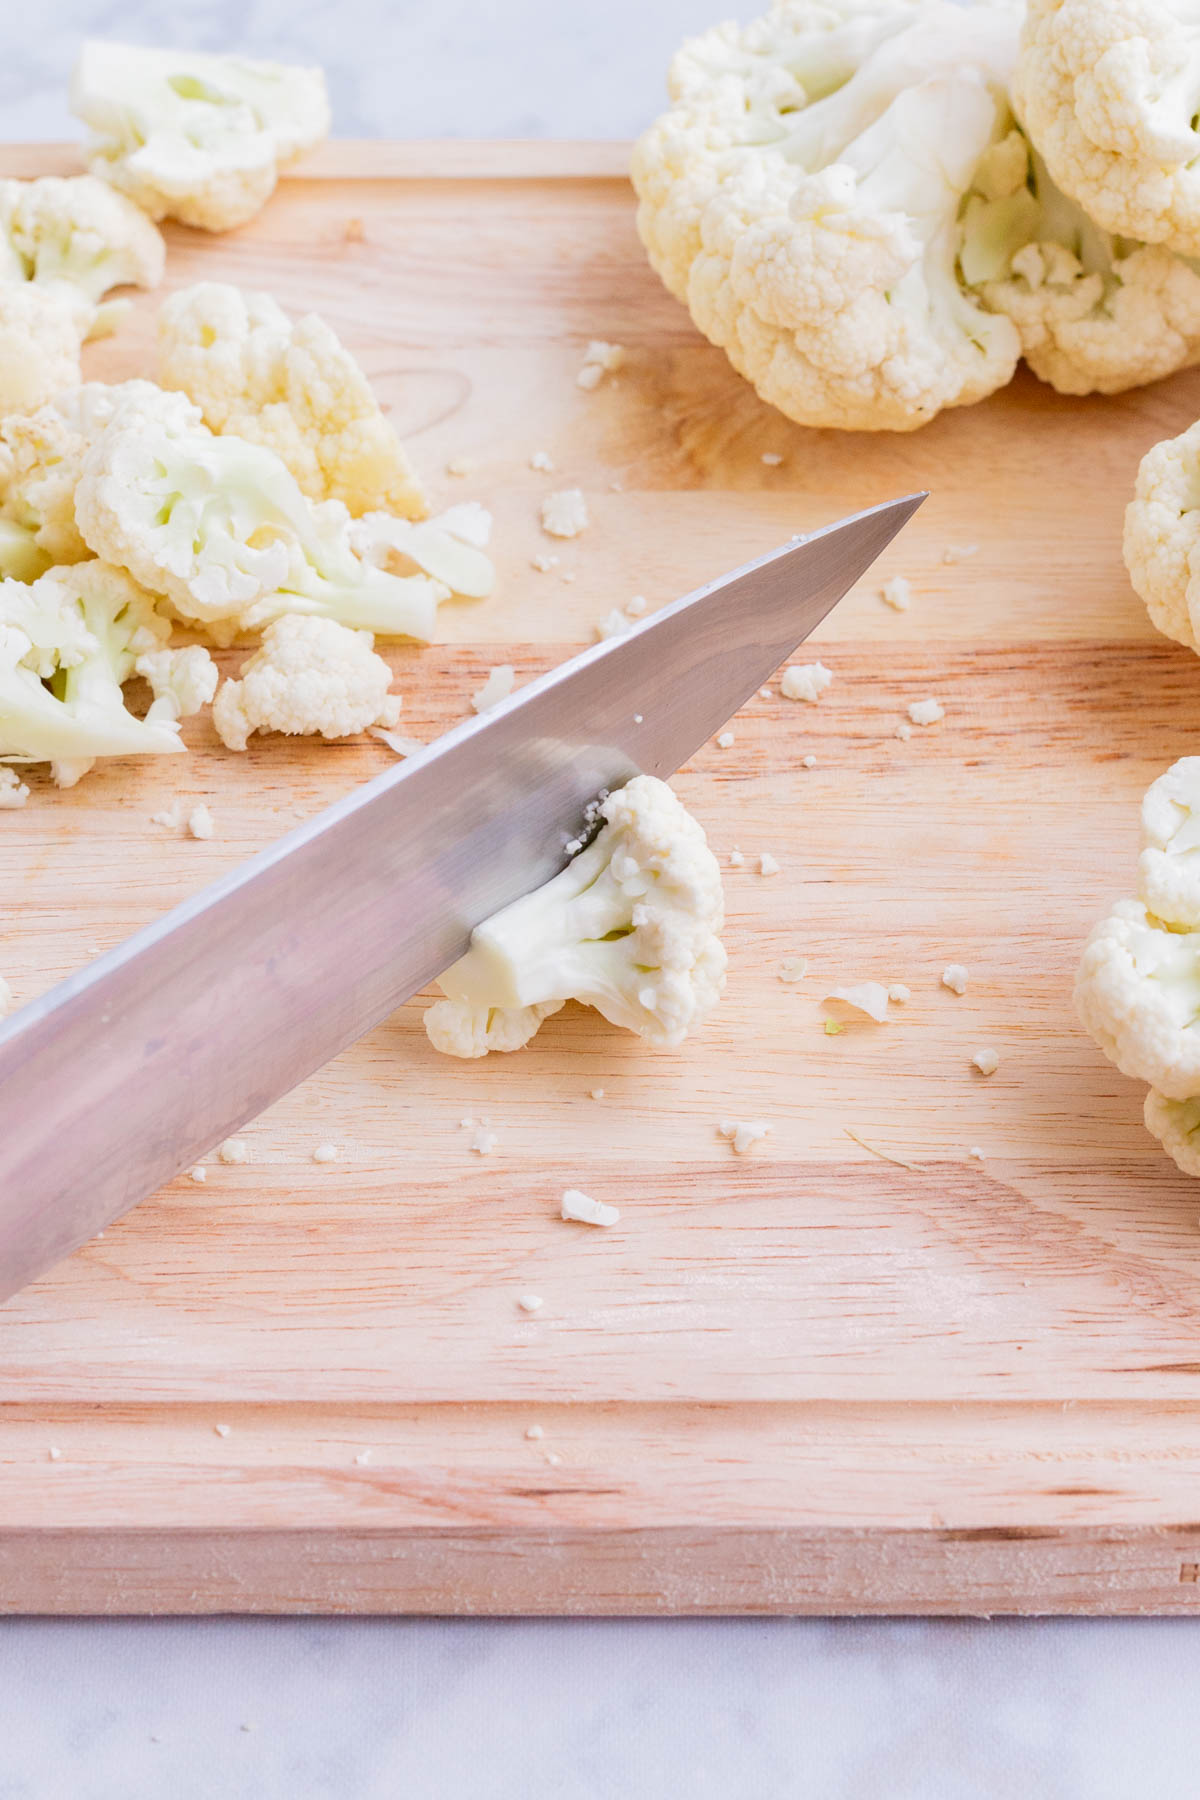 A knife cuts cauliflower into florets for a buffalo cauliflower bites recipe.